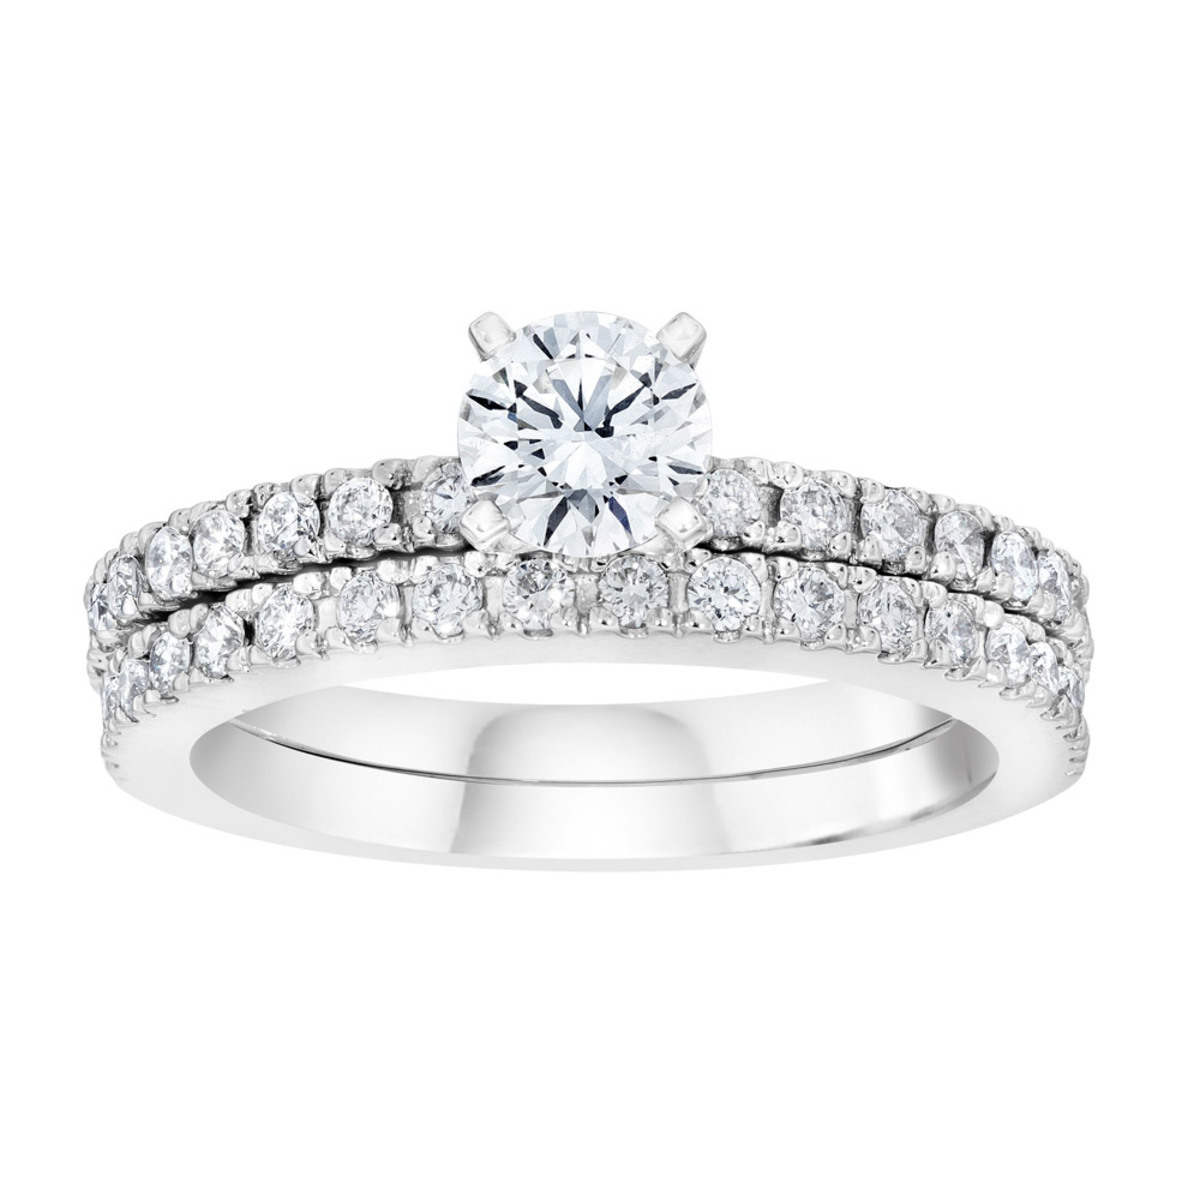 1.40ctw Round Brilliant Cut Diamond Wedding Ring Set